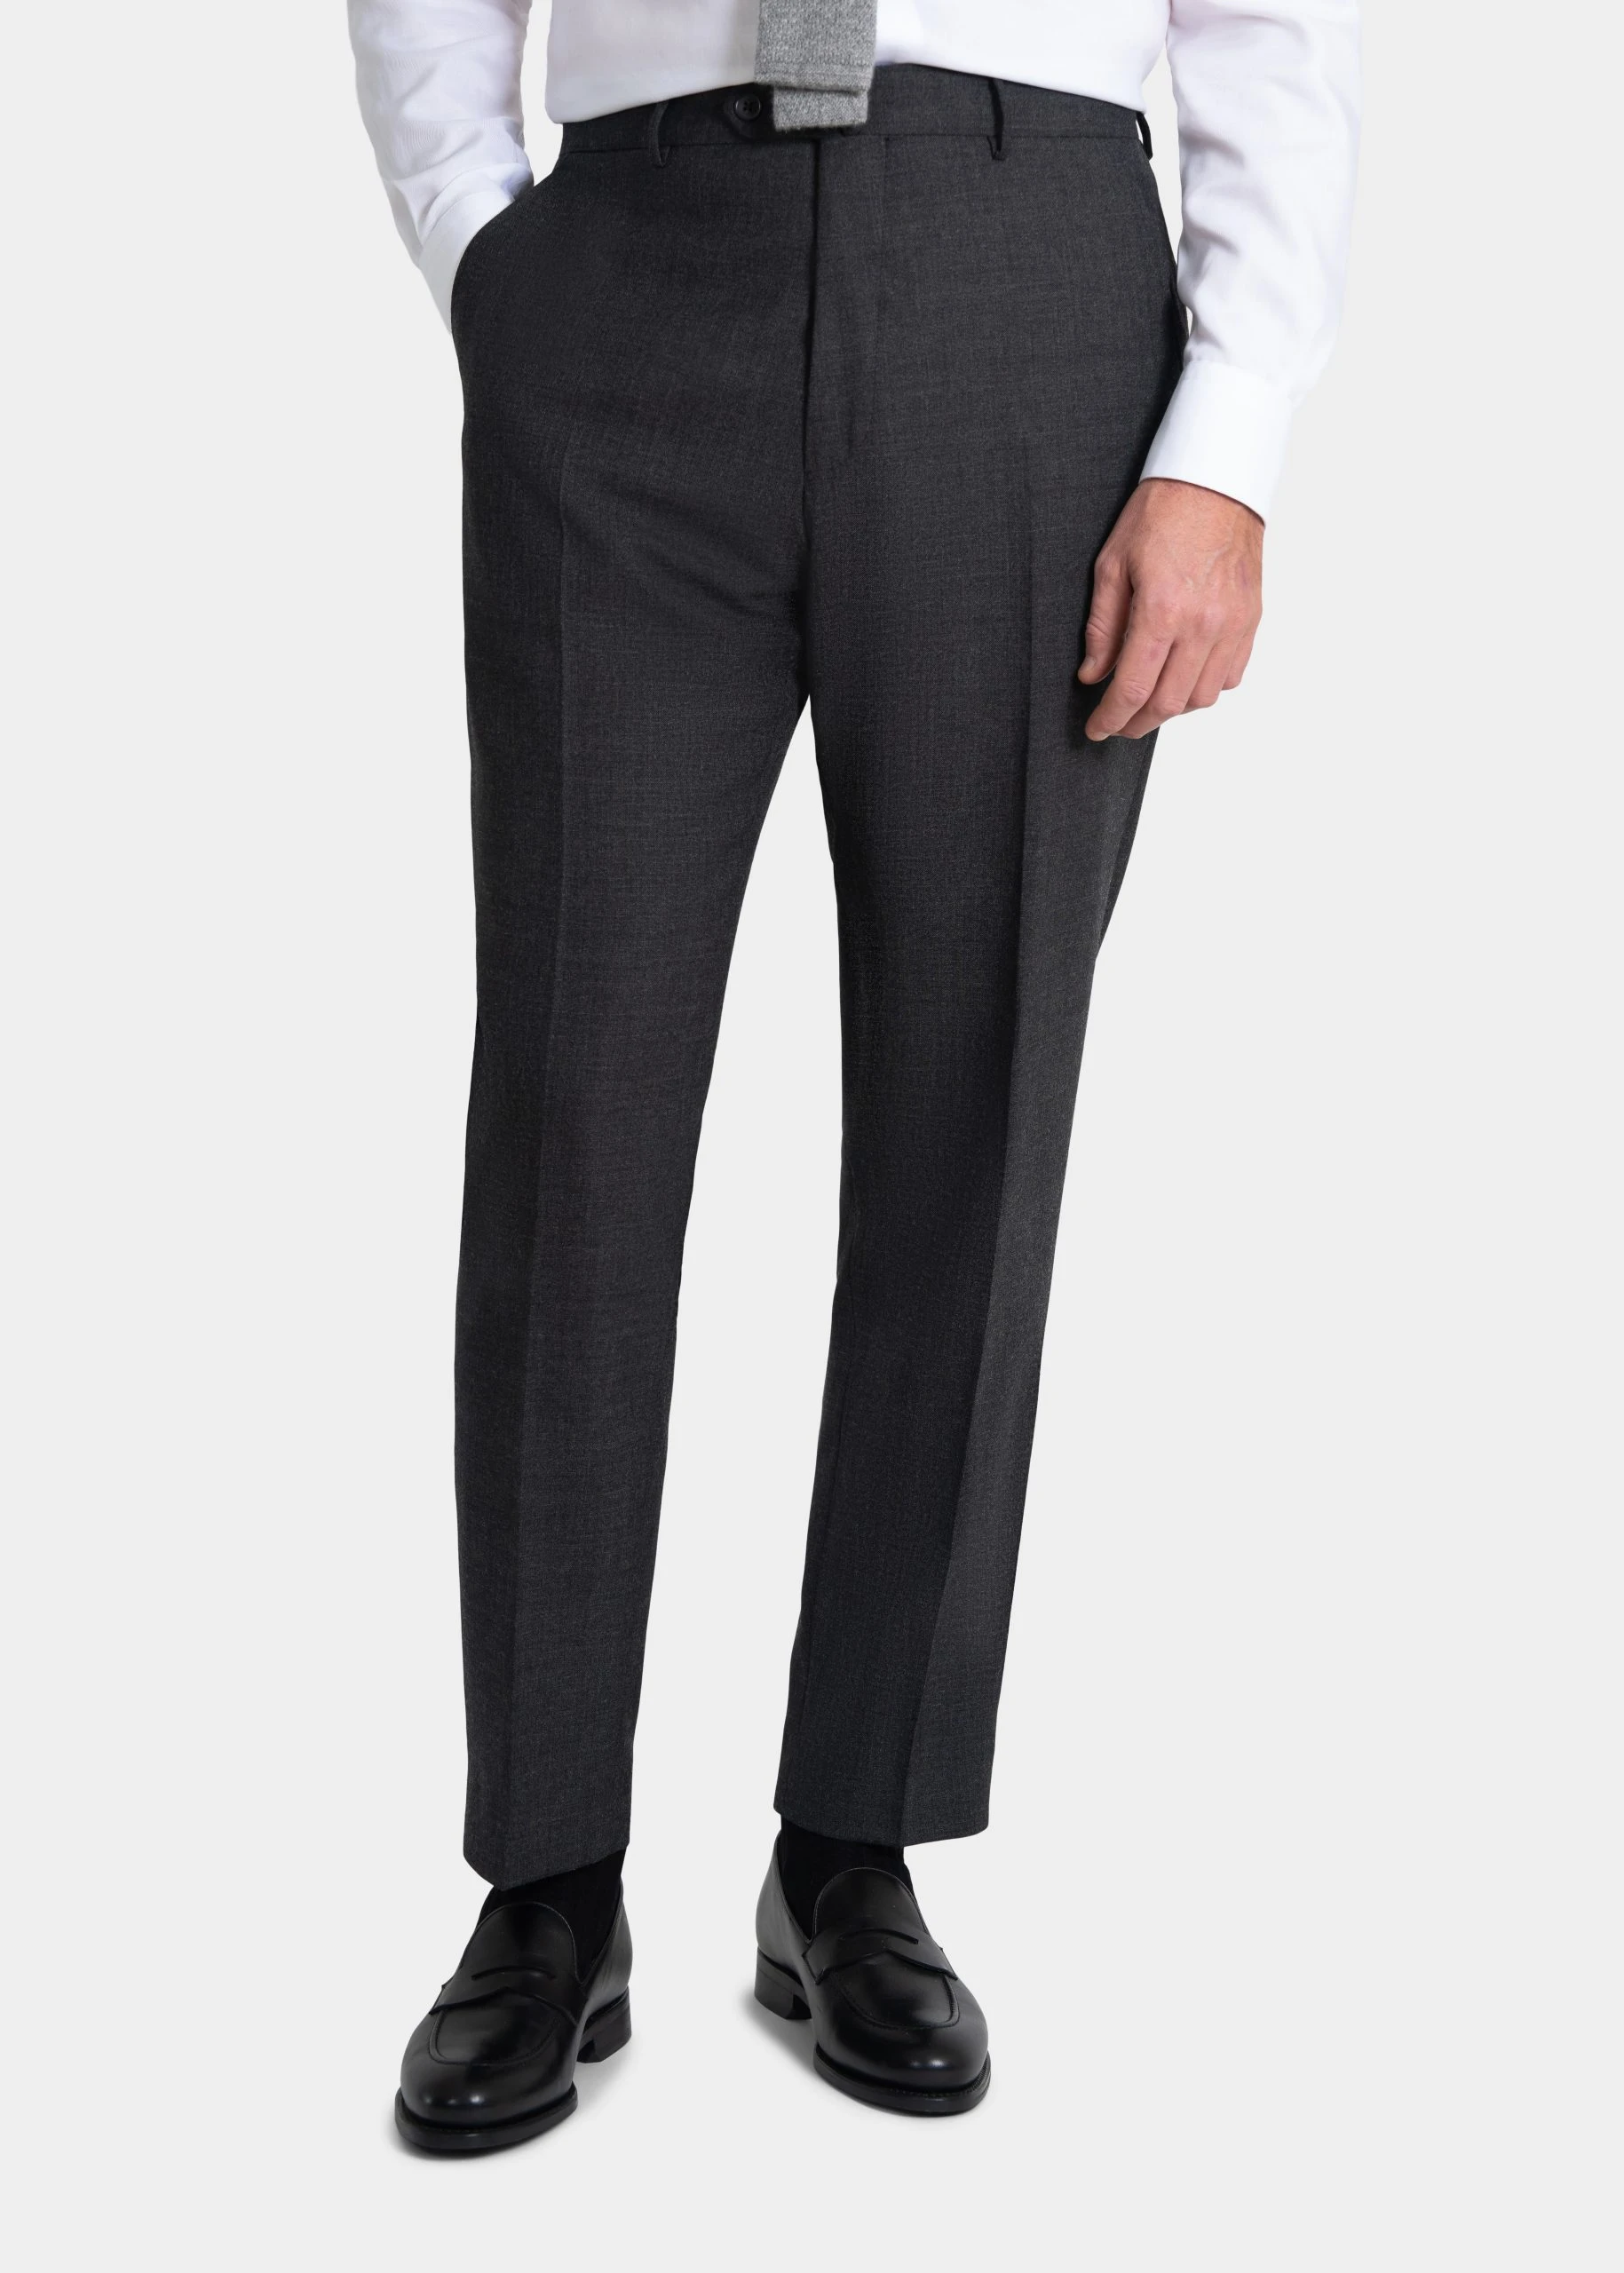 dark grey suit trousers in twistair fabric